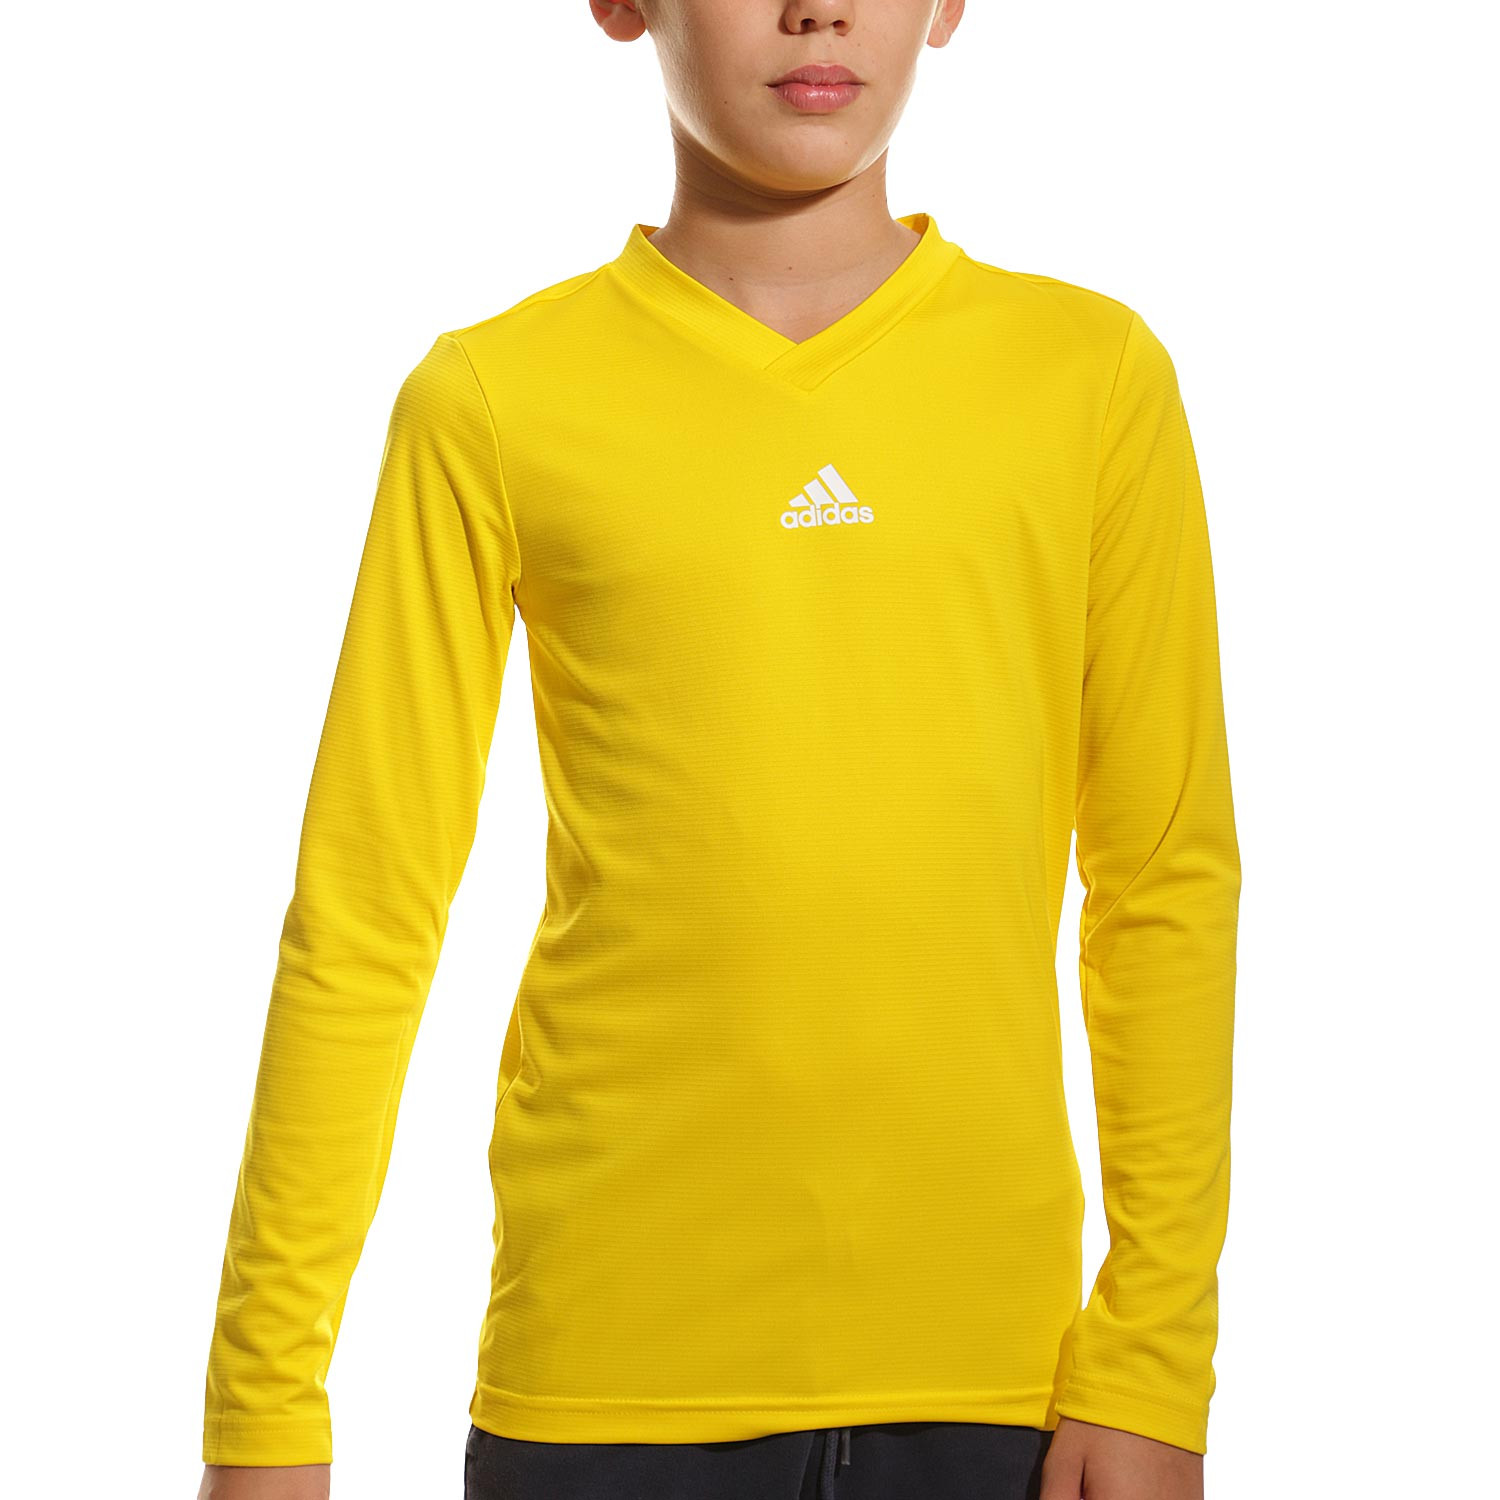 Camiseta manga larga hombre Academy III amarillo negro